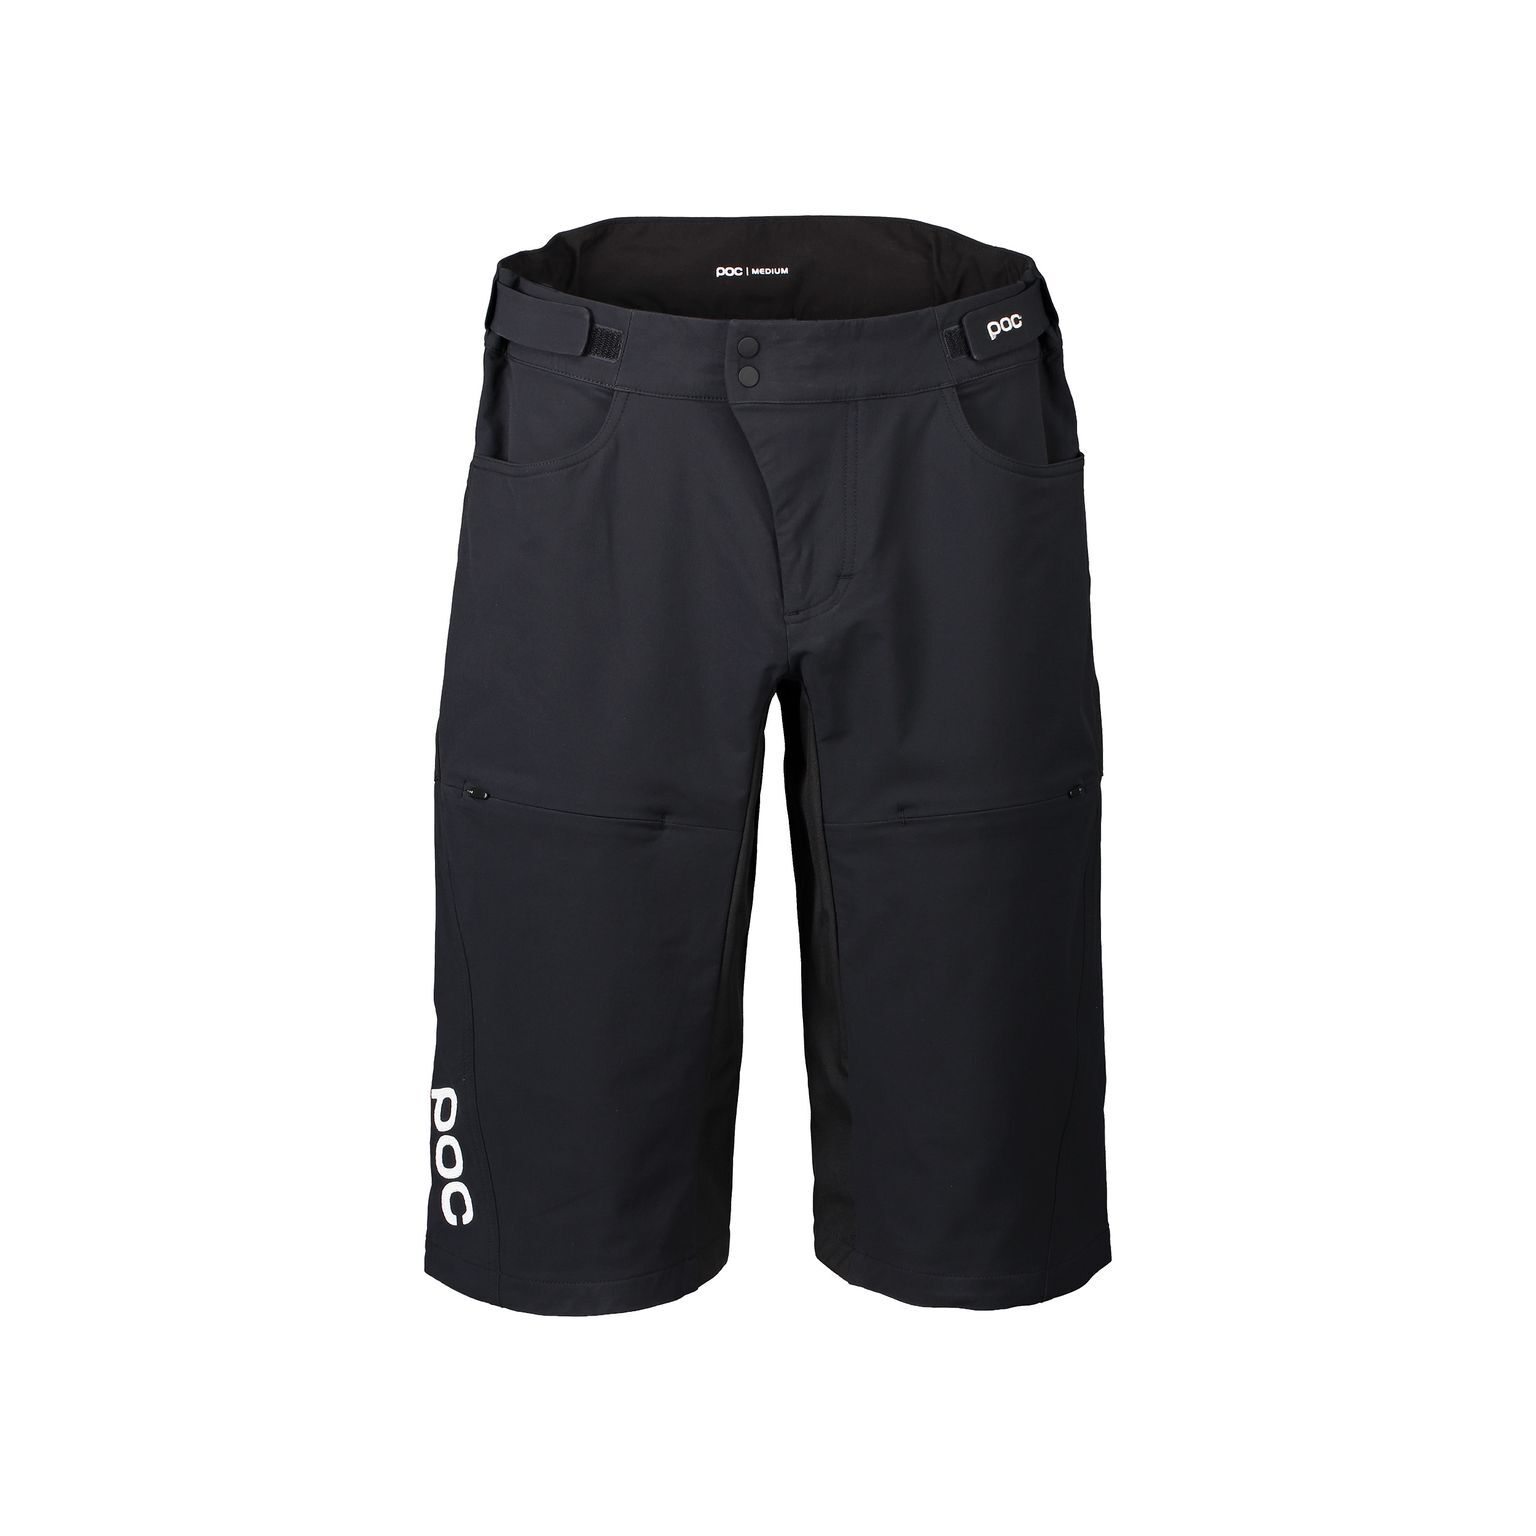 Poc Essential DH Shorts - MTB shorts - Men's